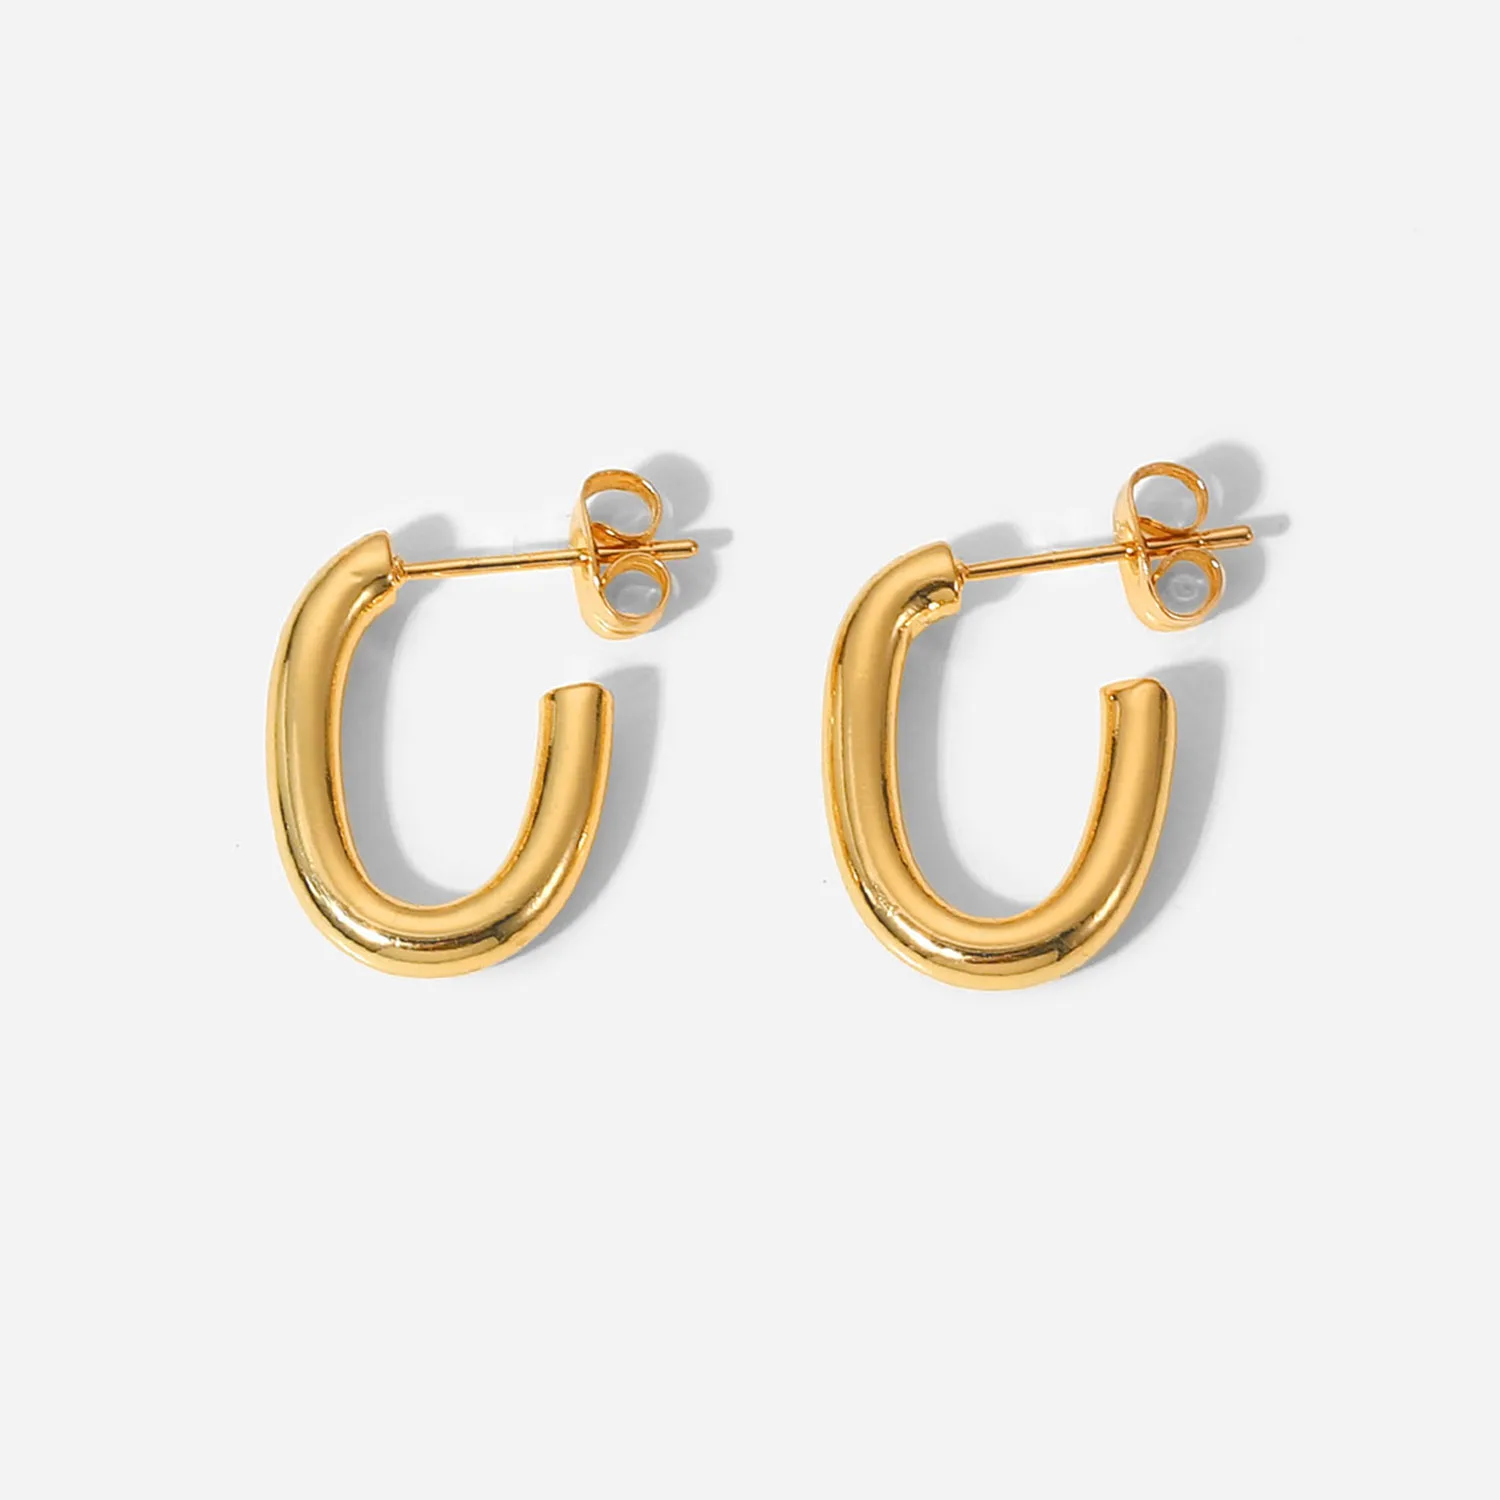 

Water Resistant 18K PVD Gold Plated Oval Shape Hoop Earrings Jewelry Gift Stainless Steel CC Shape Hoop Earring for Women